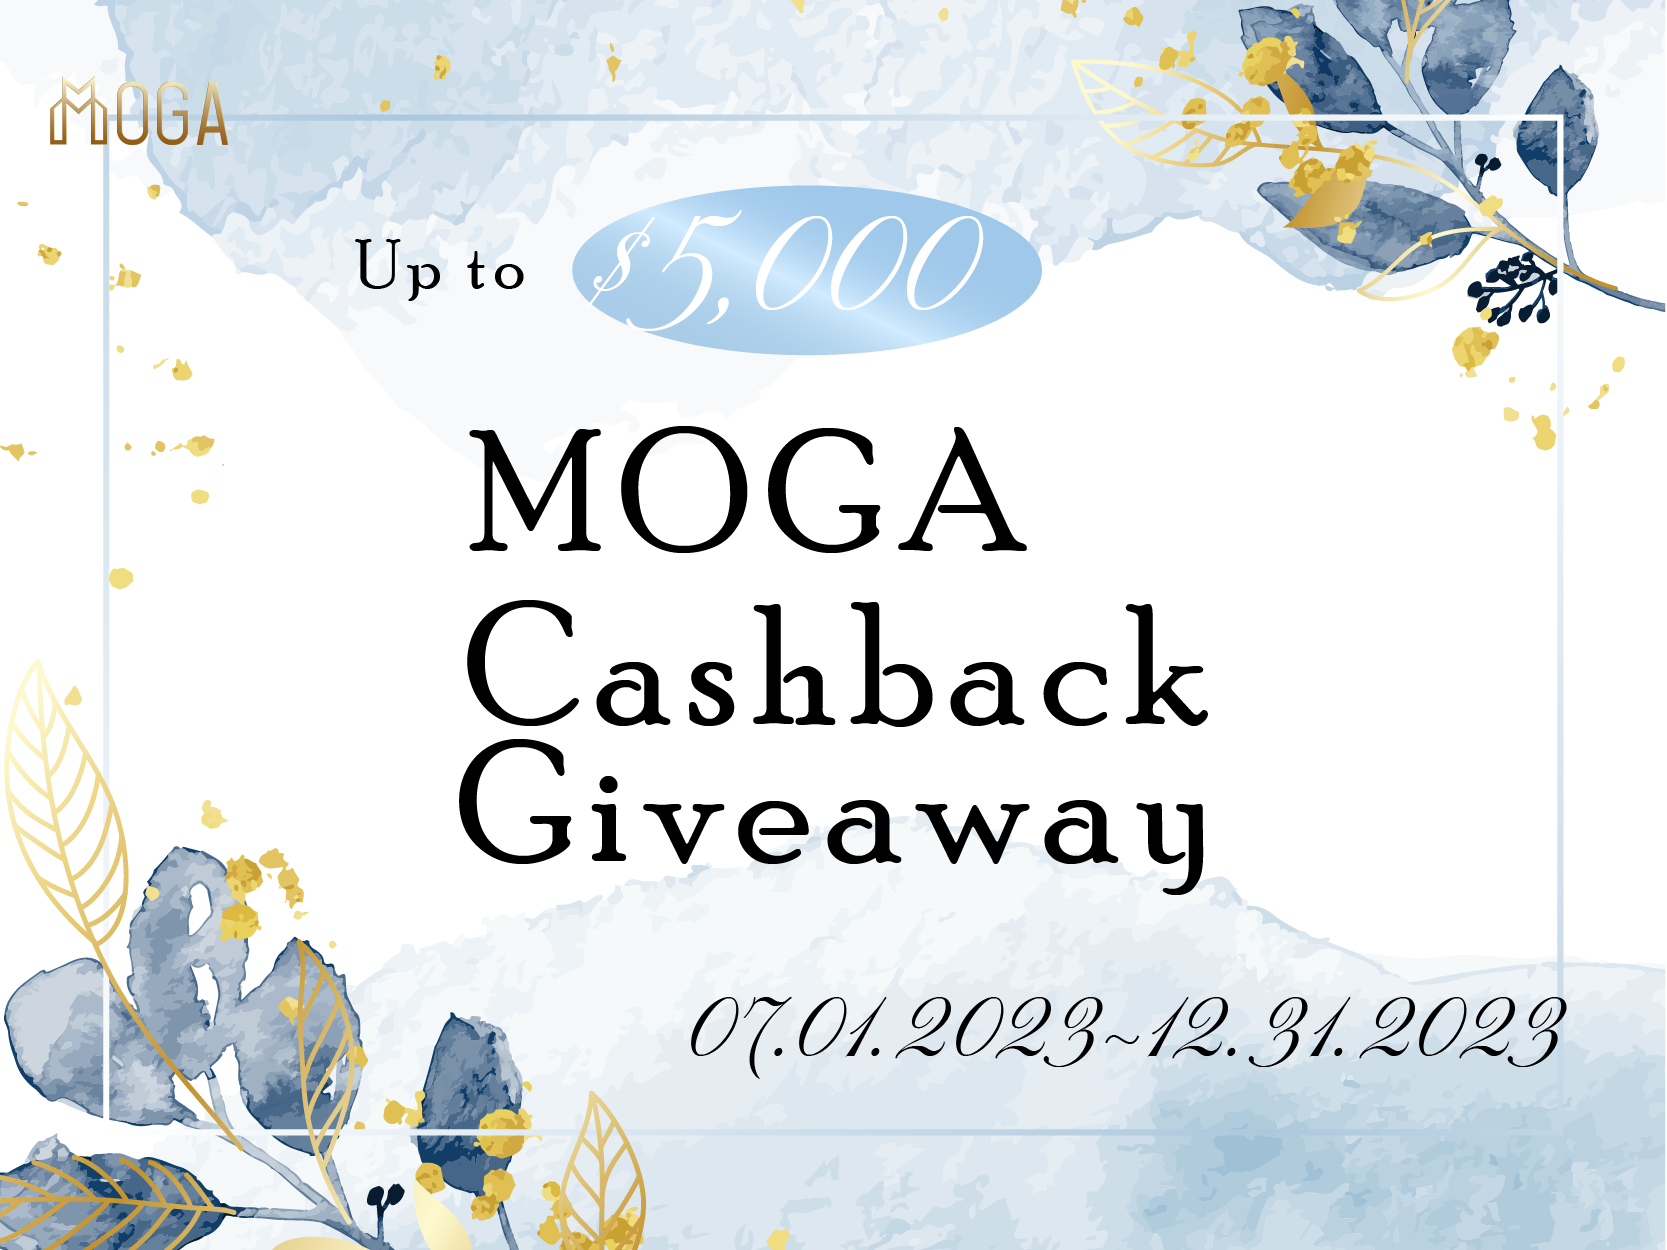 MOGA Cashback Giveaway